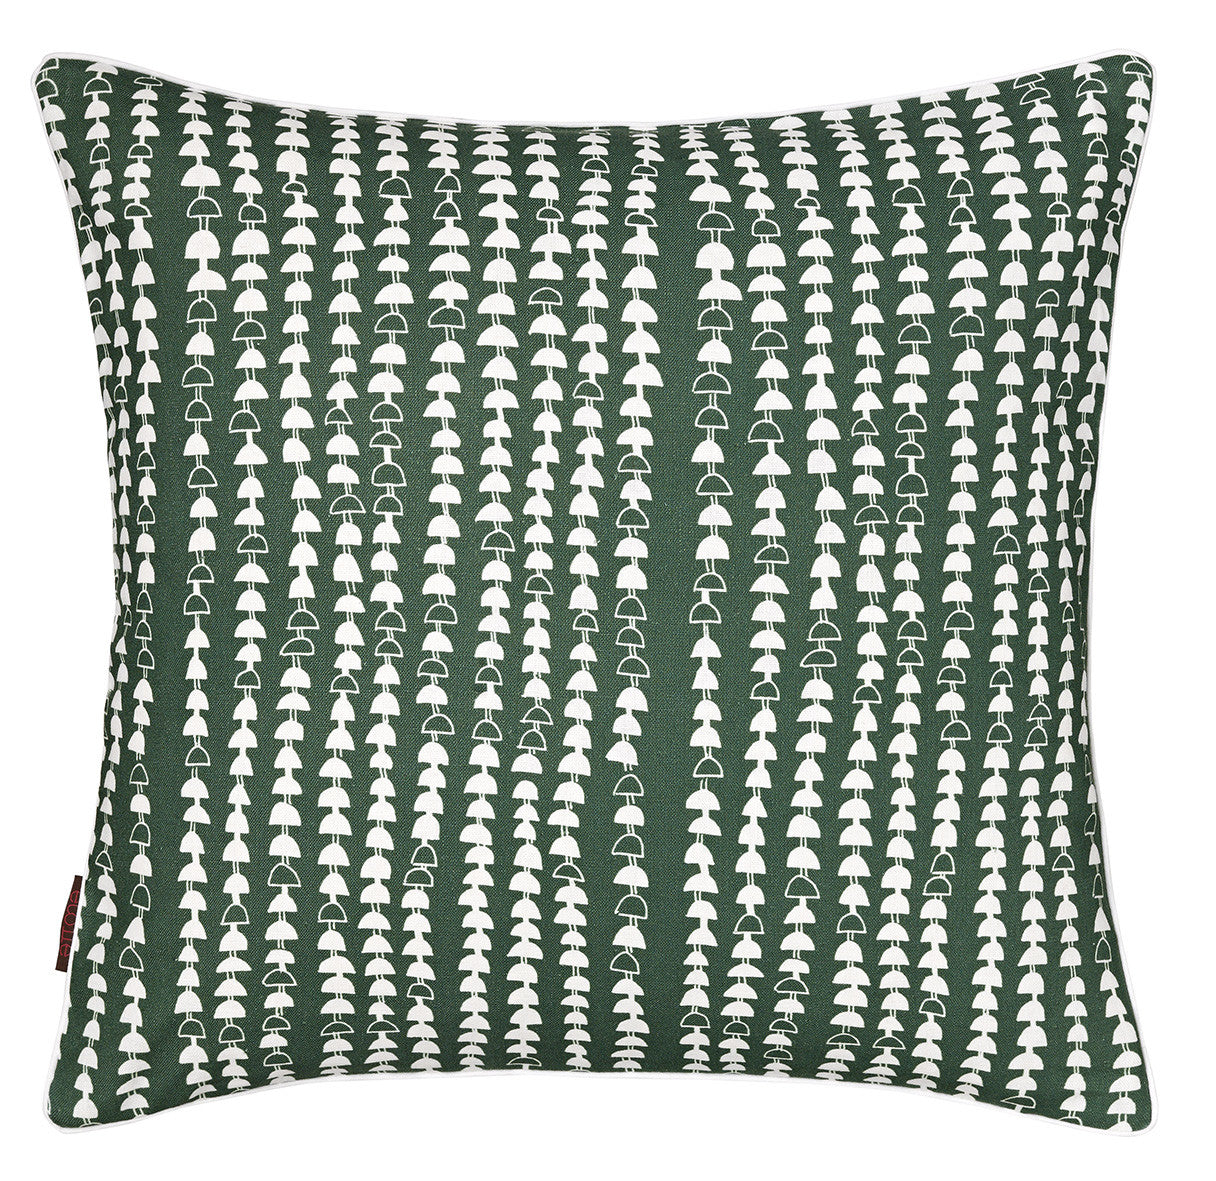 Hopi Graphic Pattern Cotton Linen Decorative Throw Pillow in Dark Moss Green 45x45cm 18x18"